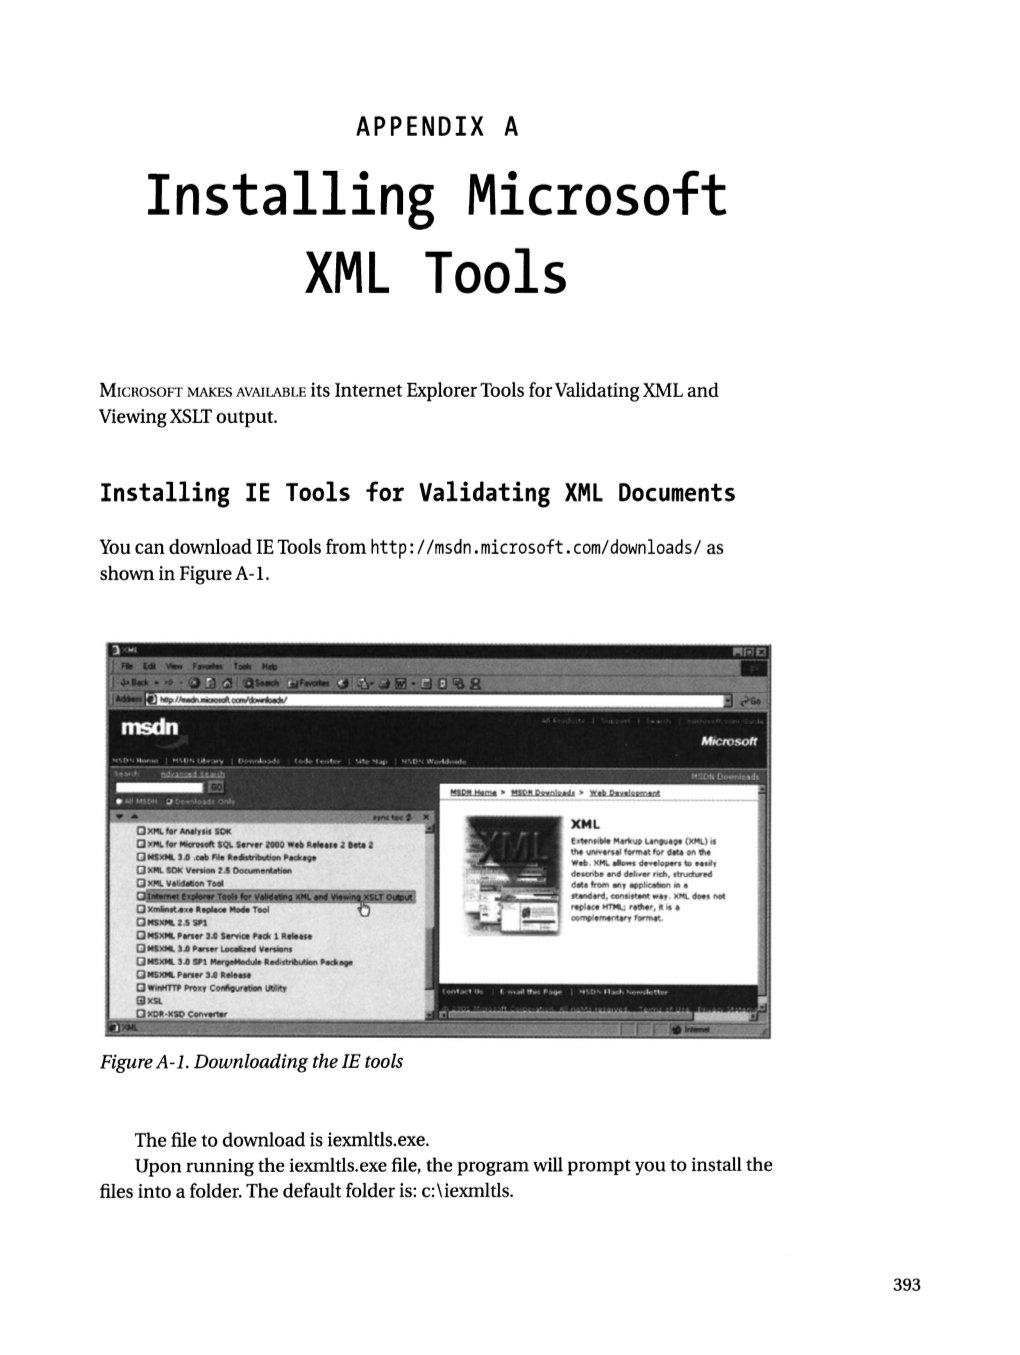 Installing Microsoft XML Tools